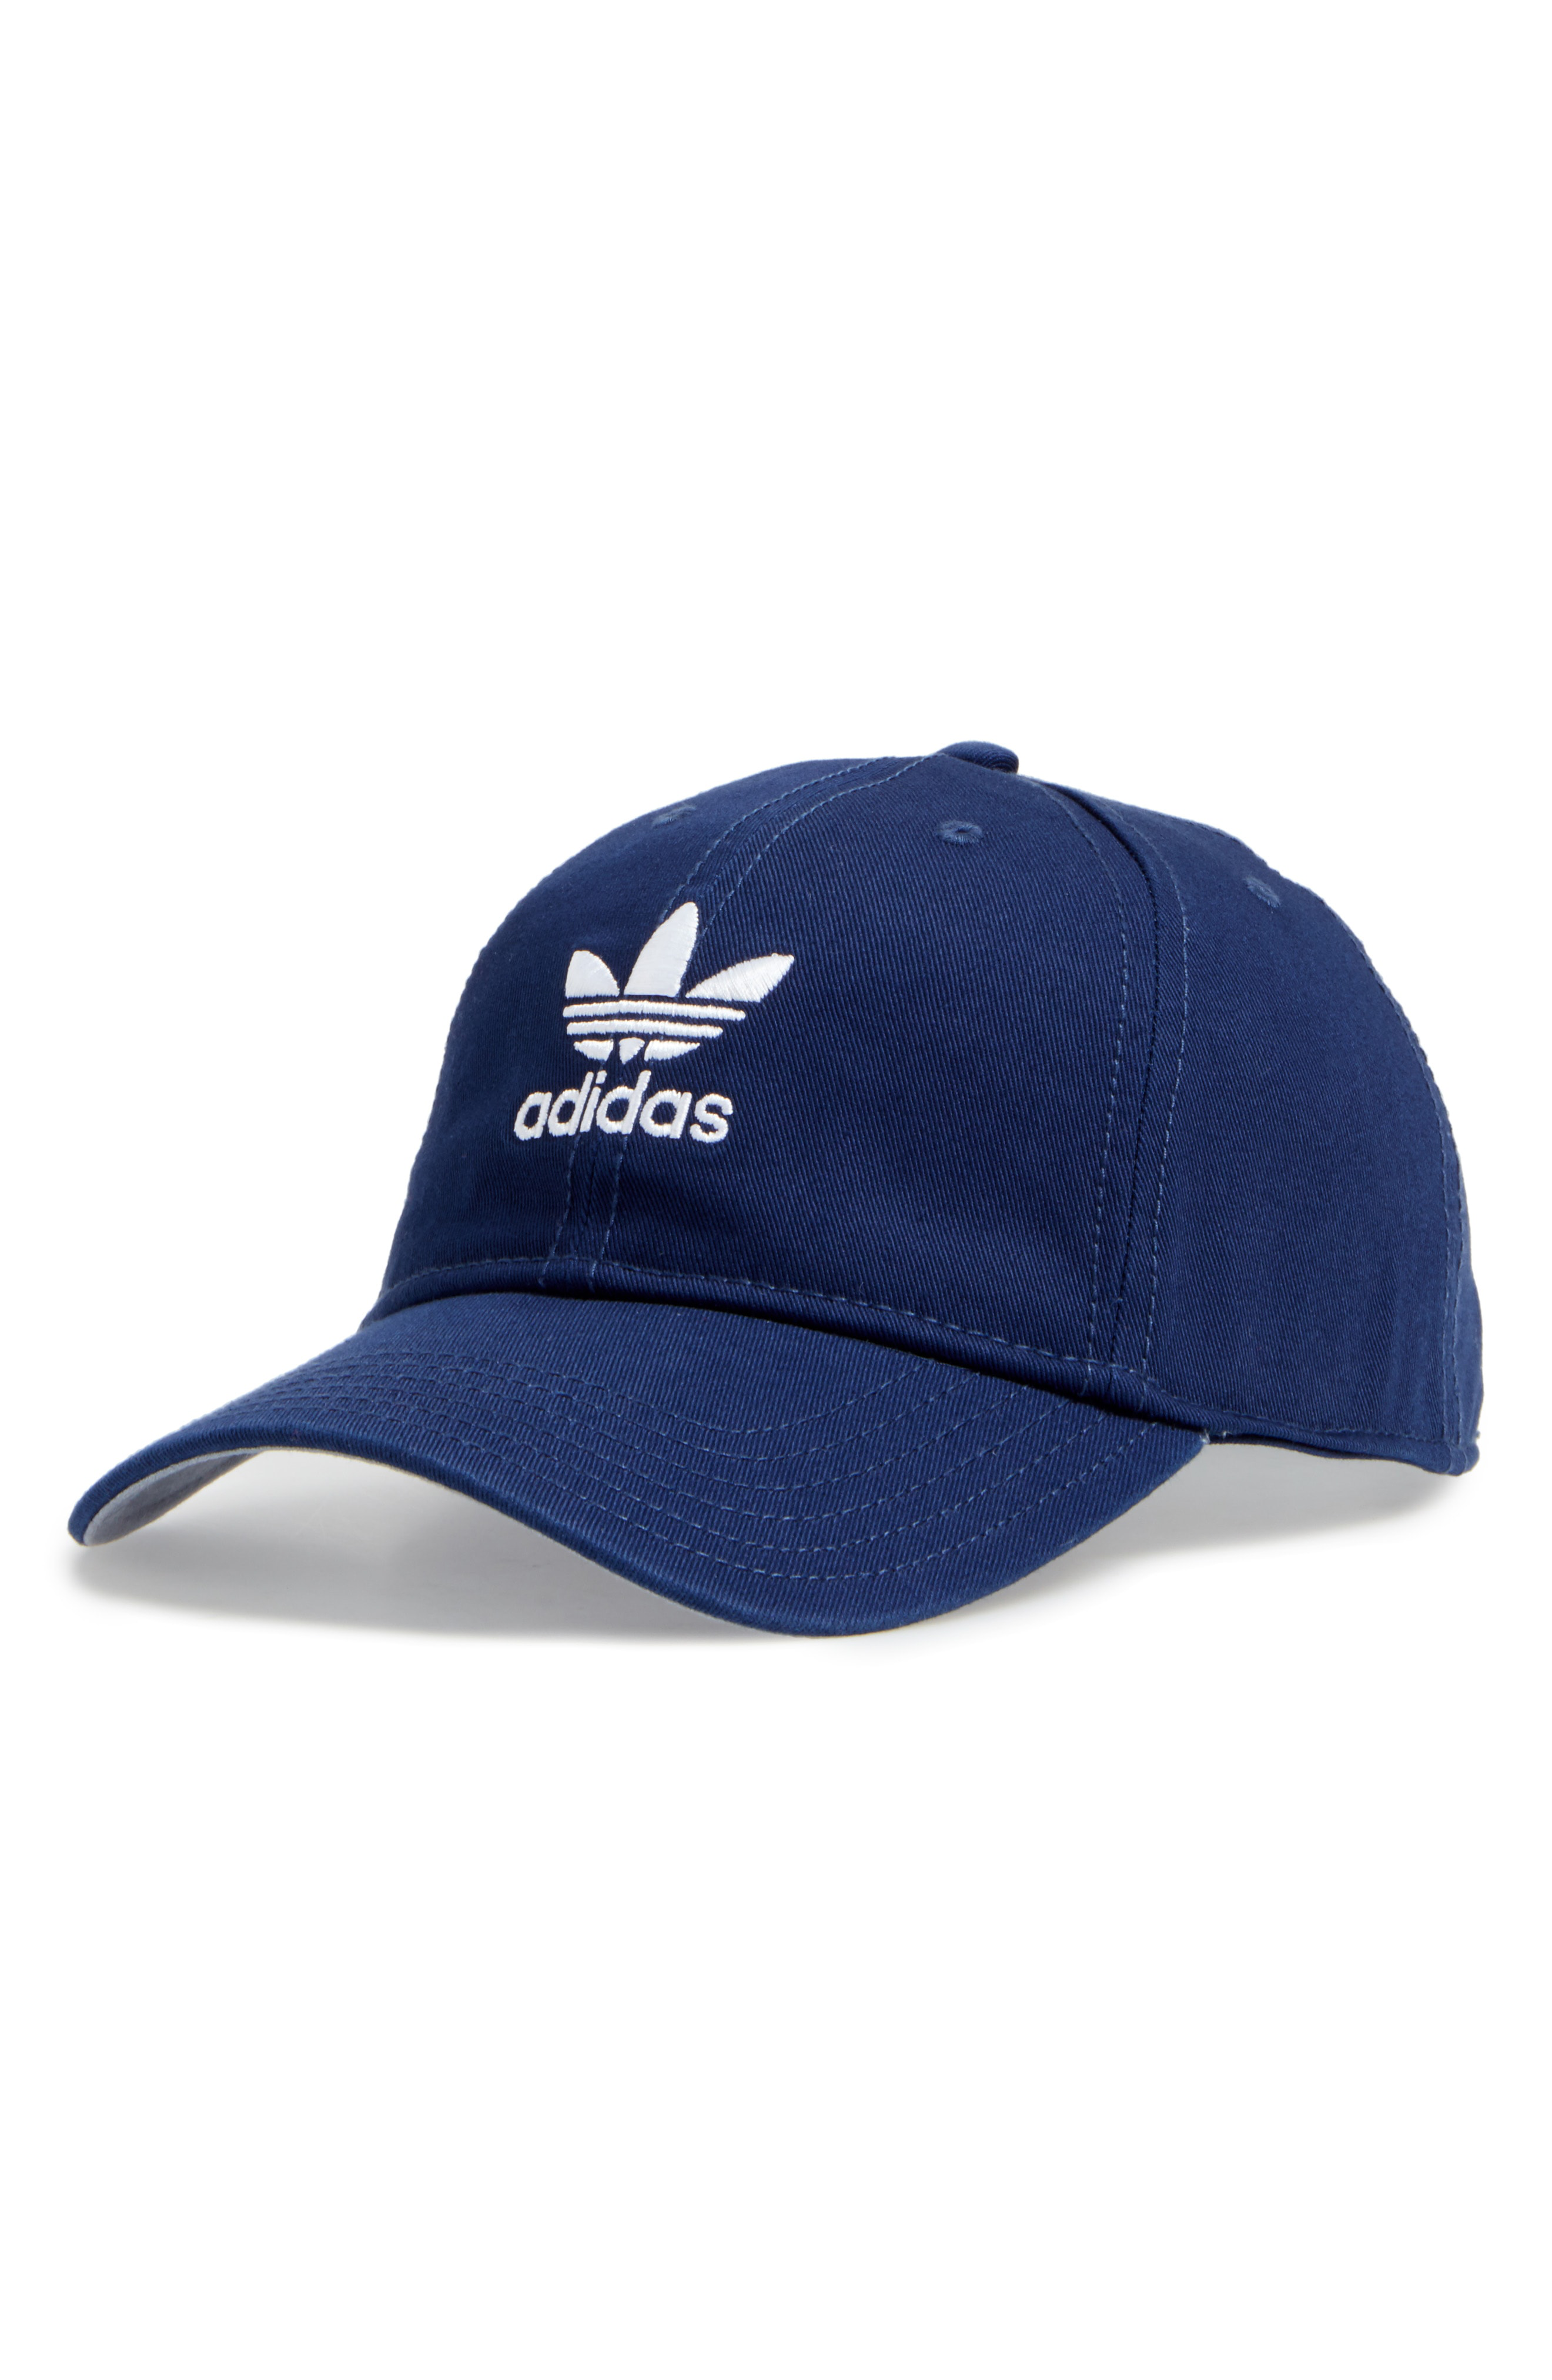 Adidas Originals Trefoil Baseball Cap - Blue In Navy | ModeSens